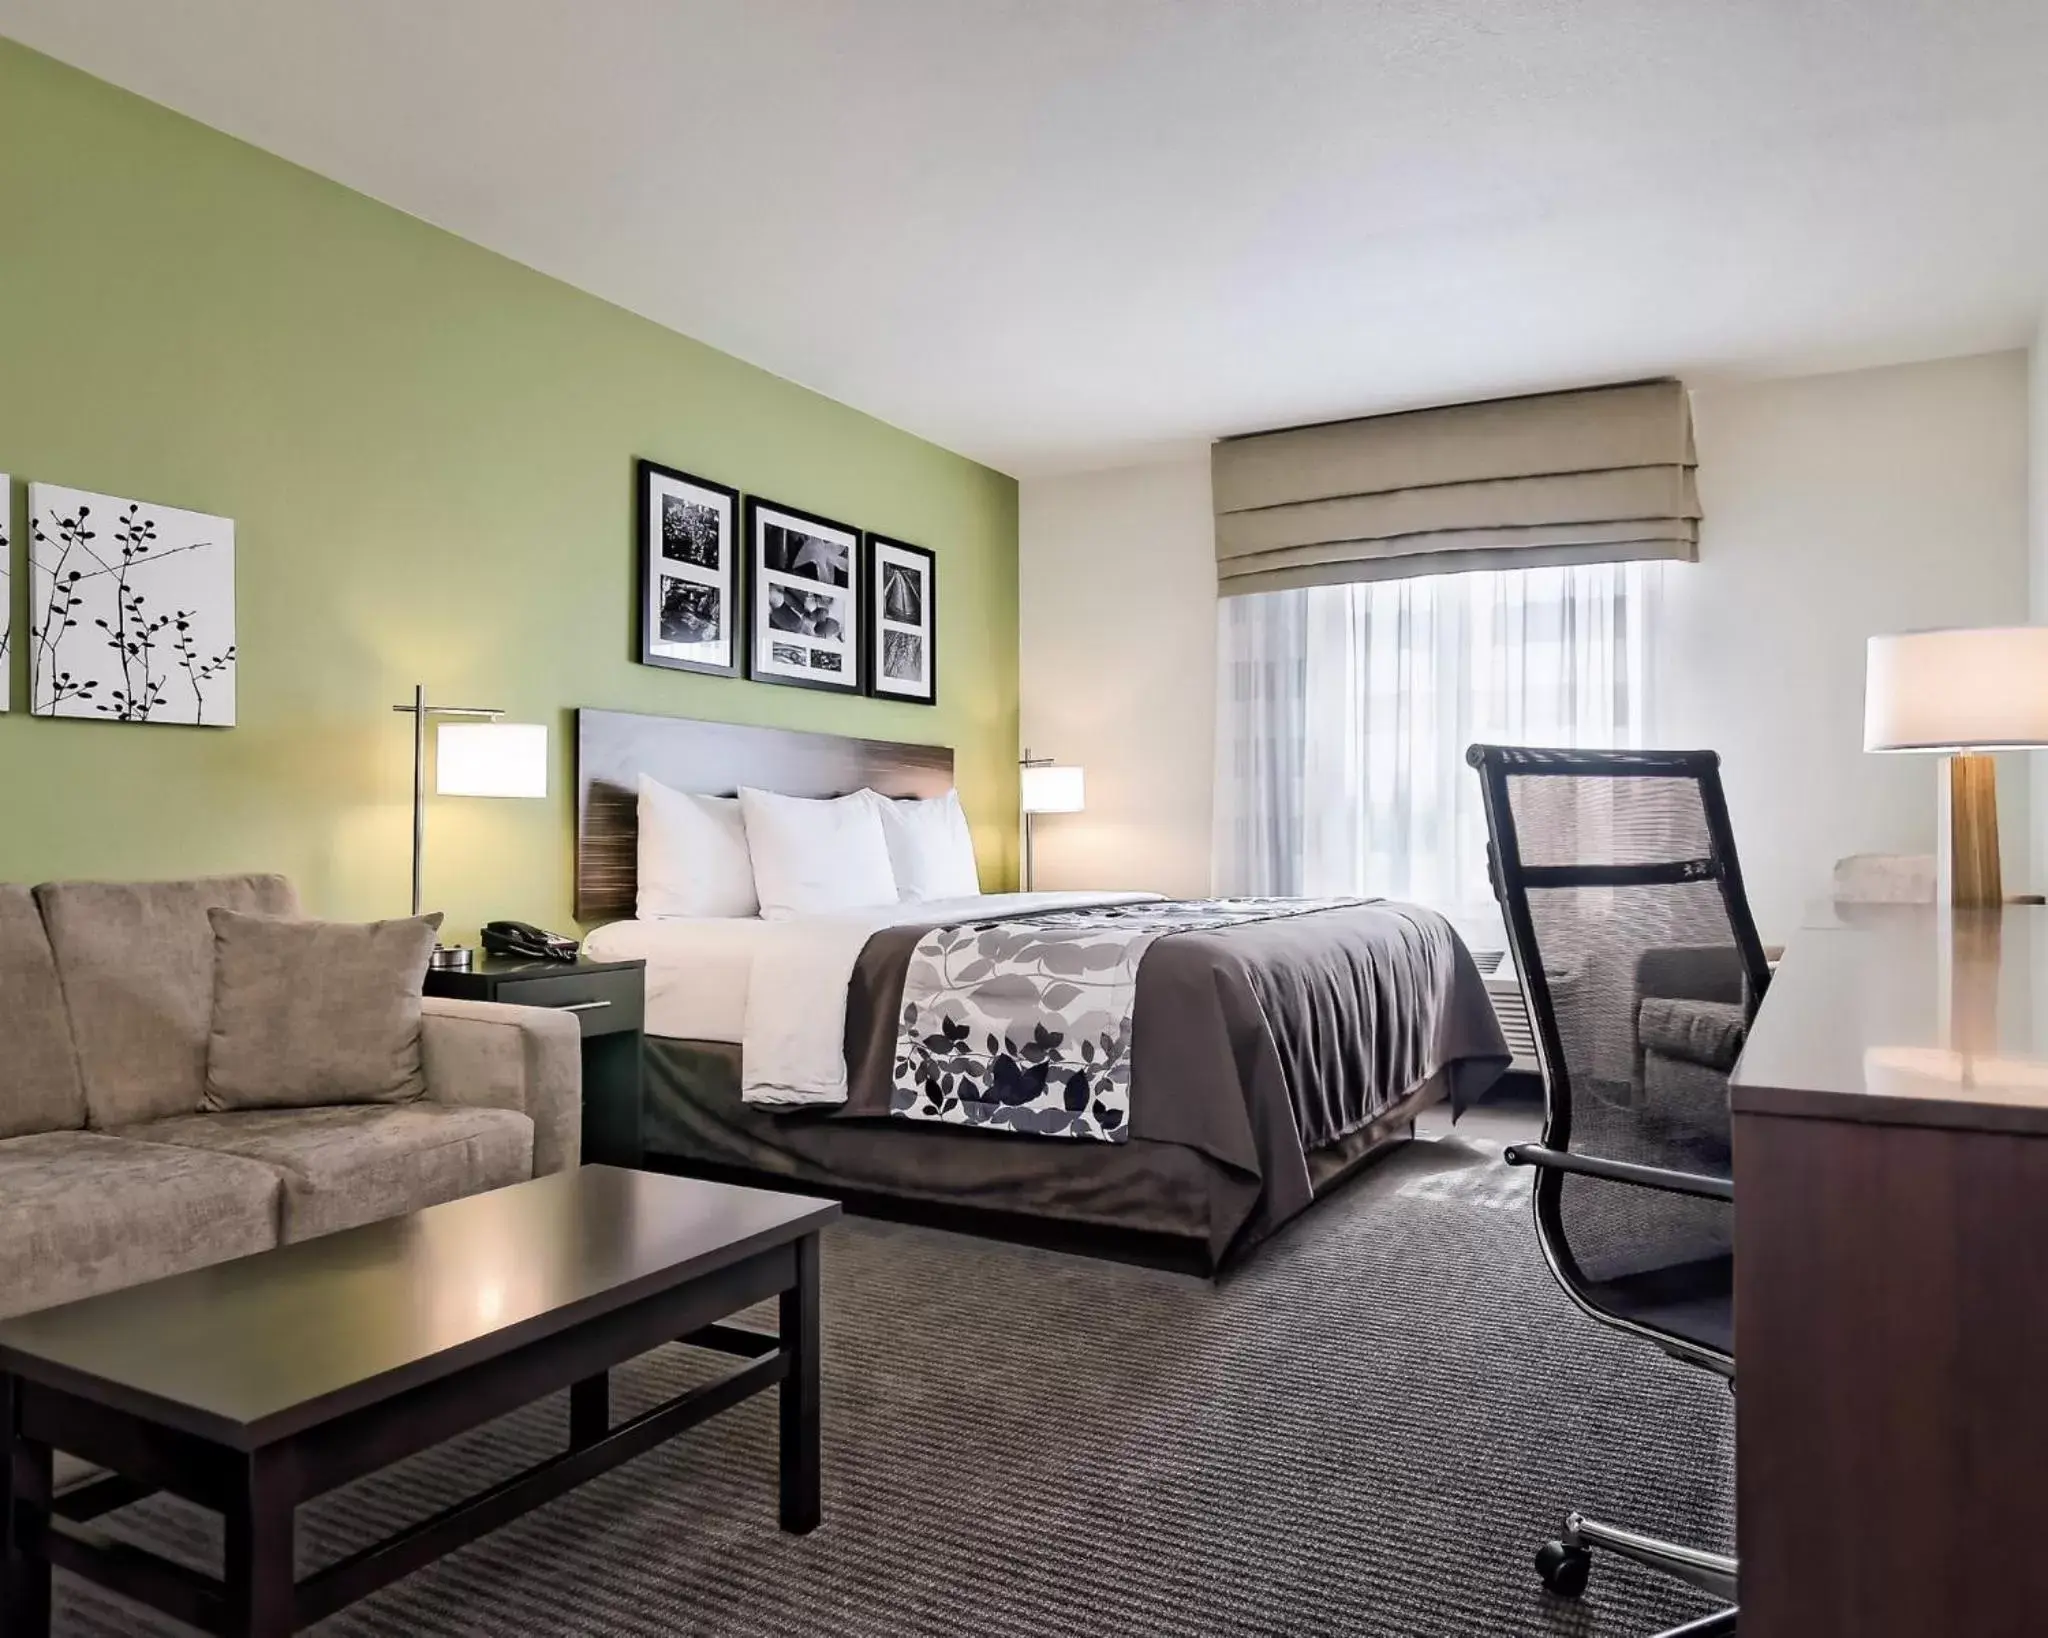 Bedroom, Room Photo in Sleep Inn & Suites - Fort Scott